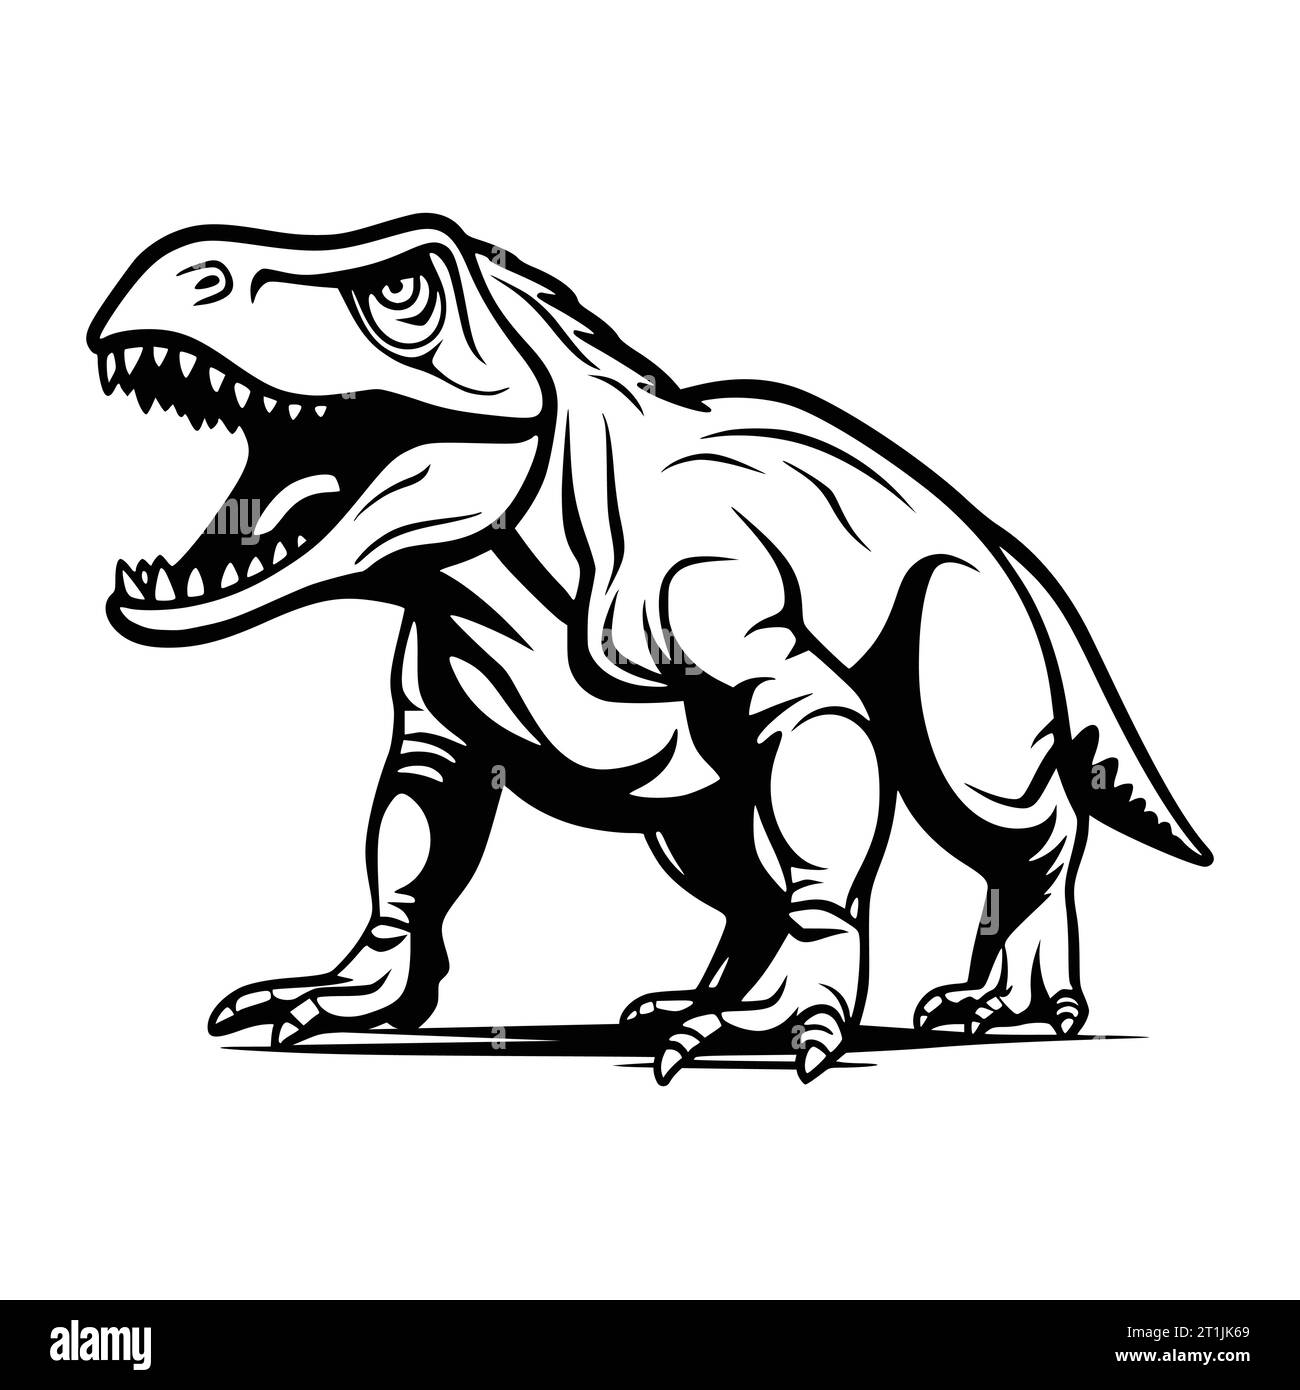 dinosaur wild animal head illustration for logo or symbol Stock Vector